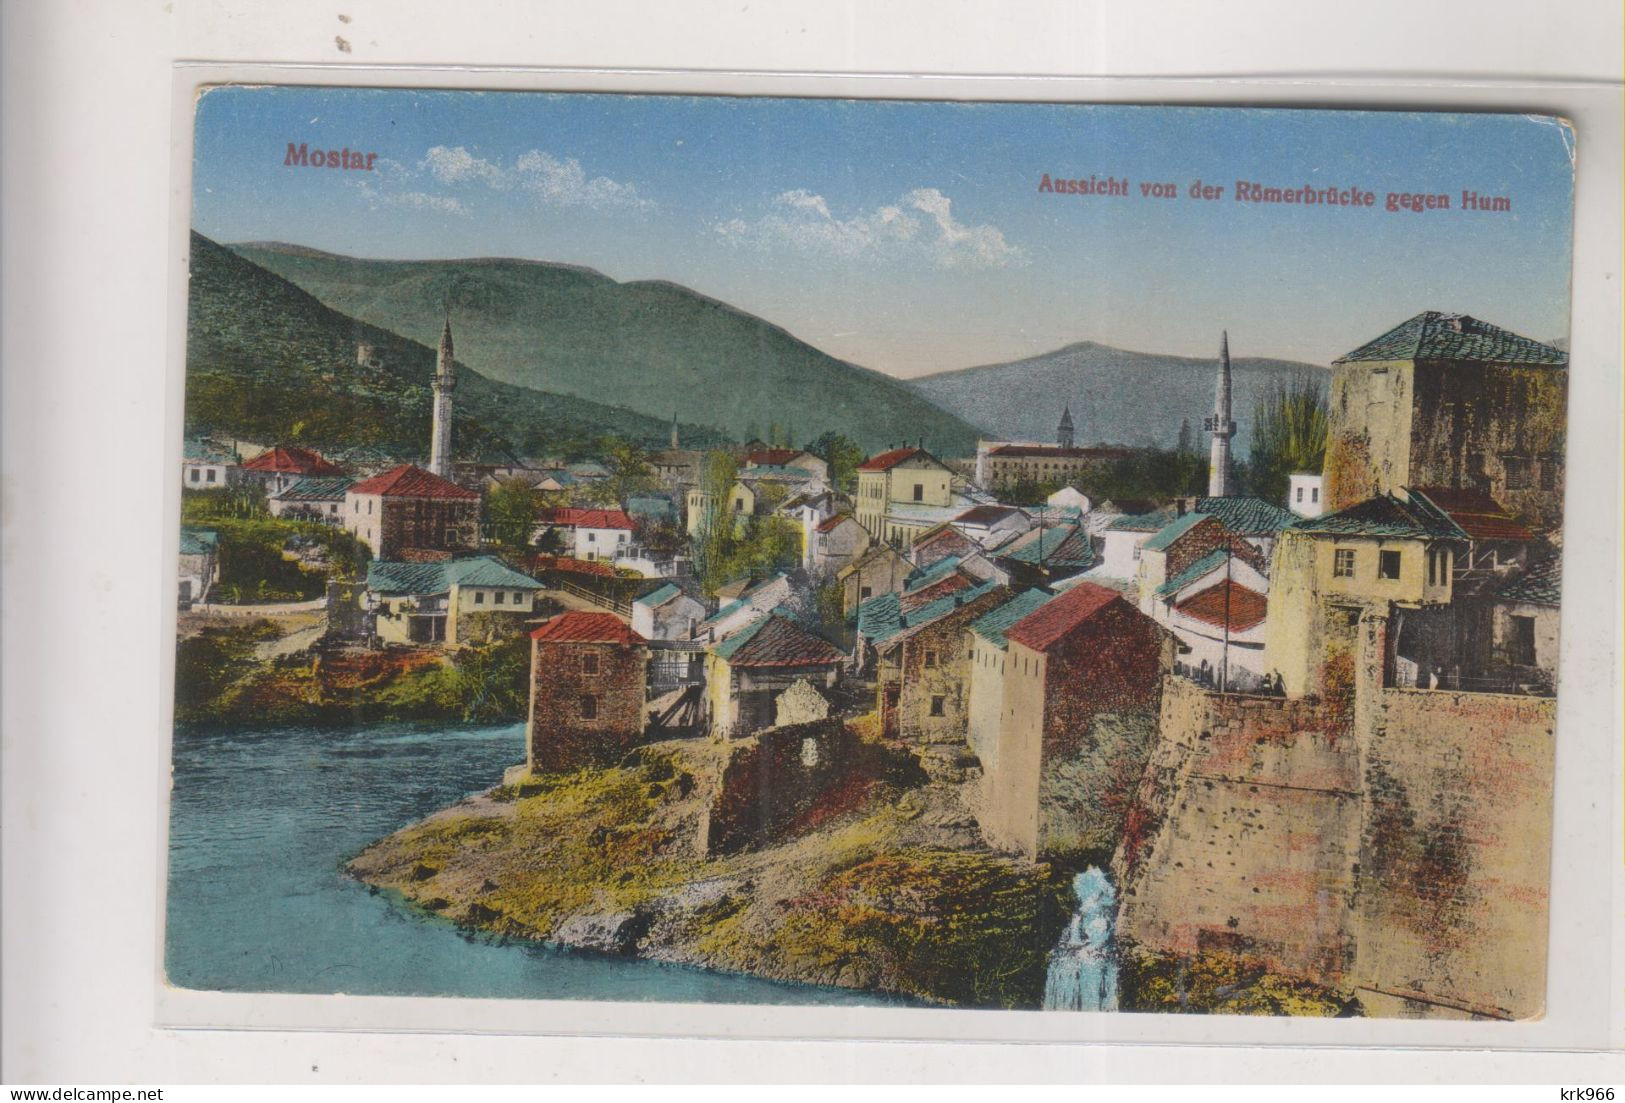 BOSNIA AND HERZEGOVINA  MOSTAR Postcard - Bosnie-Herzegovine